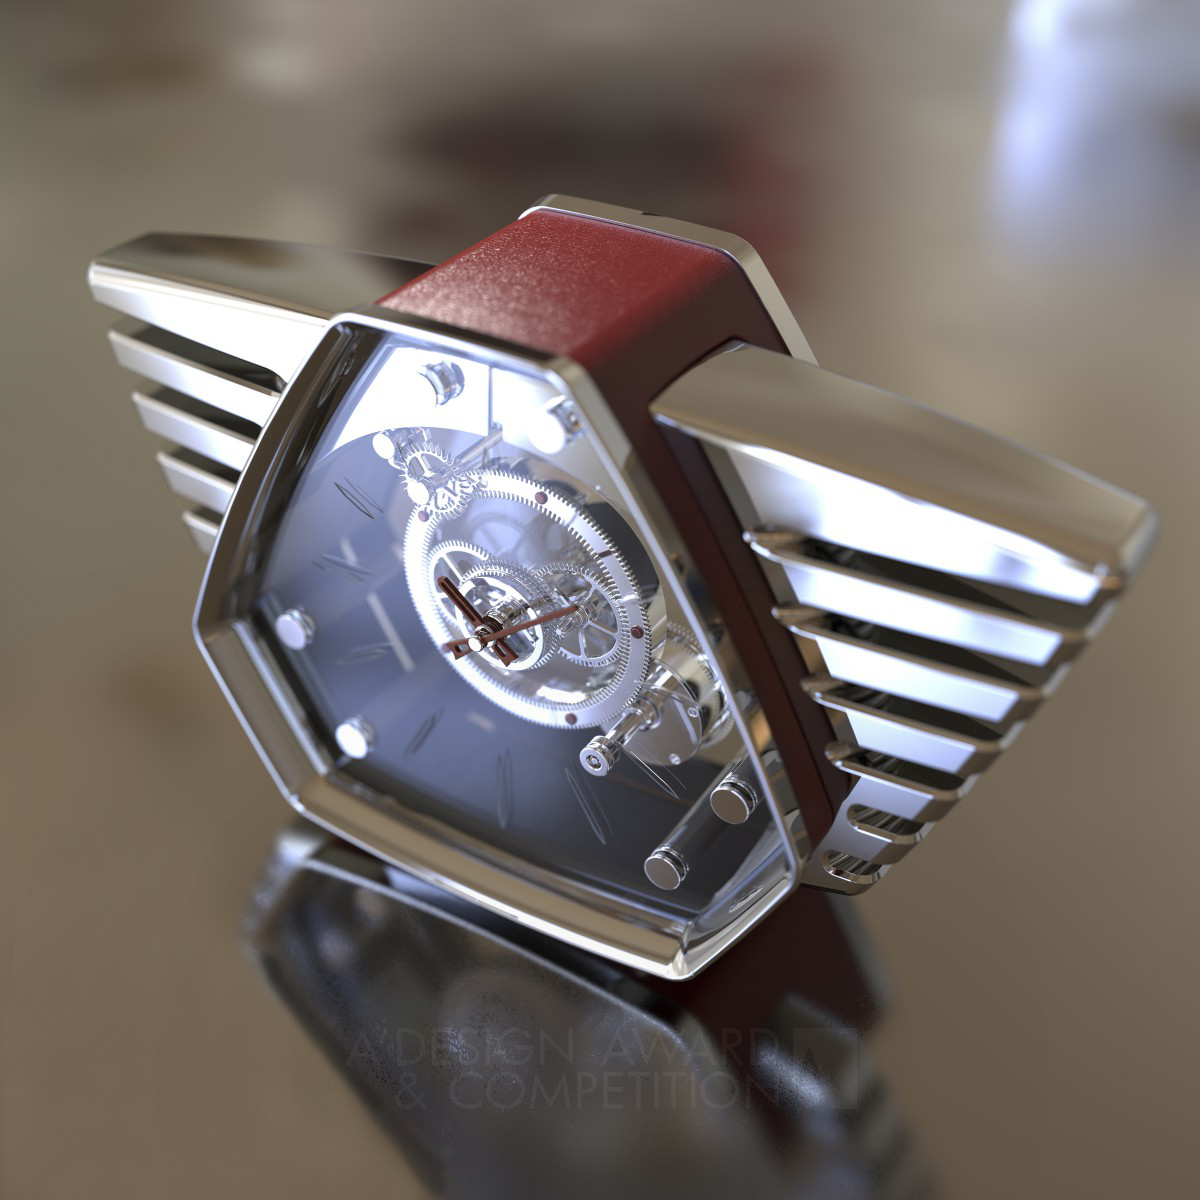 Monza: The Radiator-Inspired Table Pendulum Clock